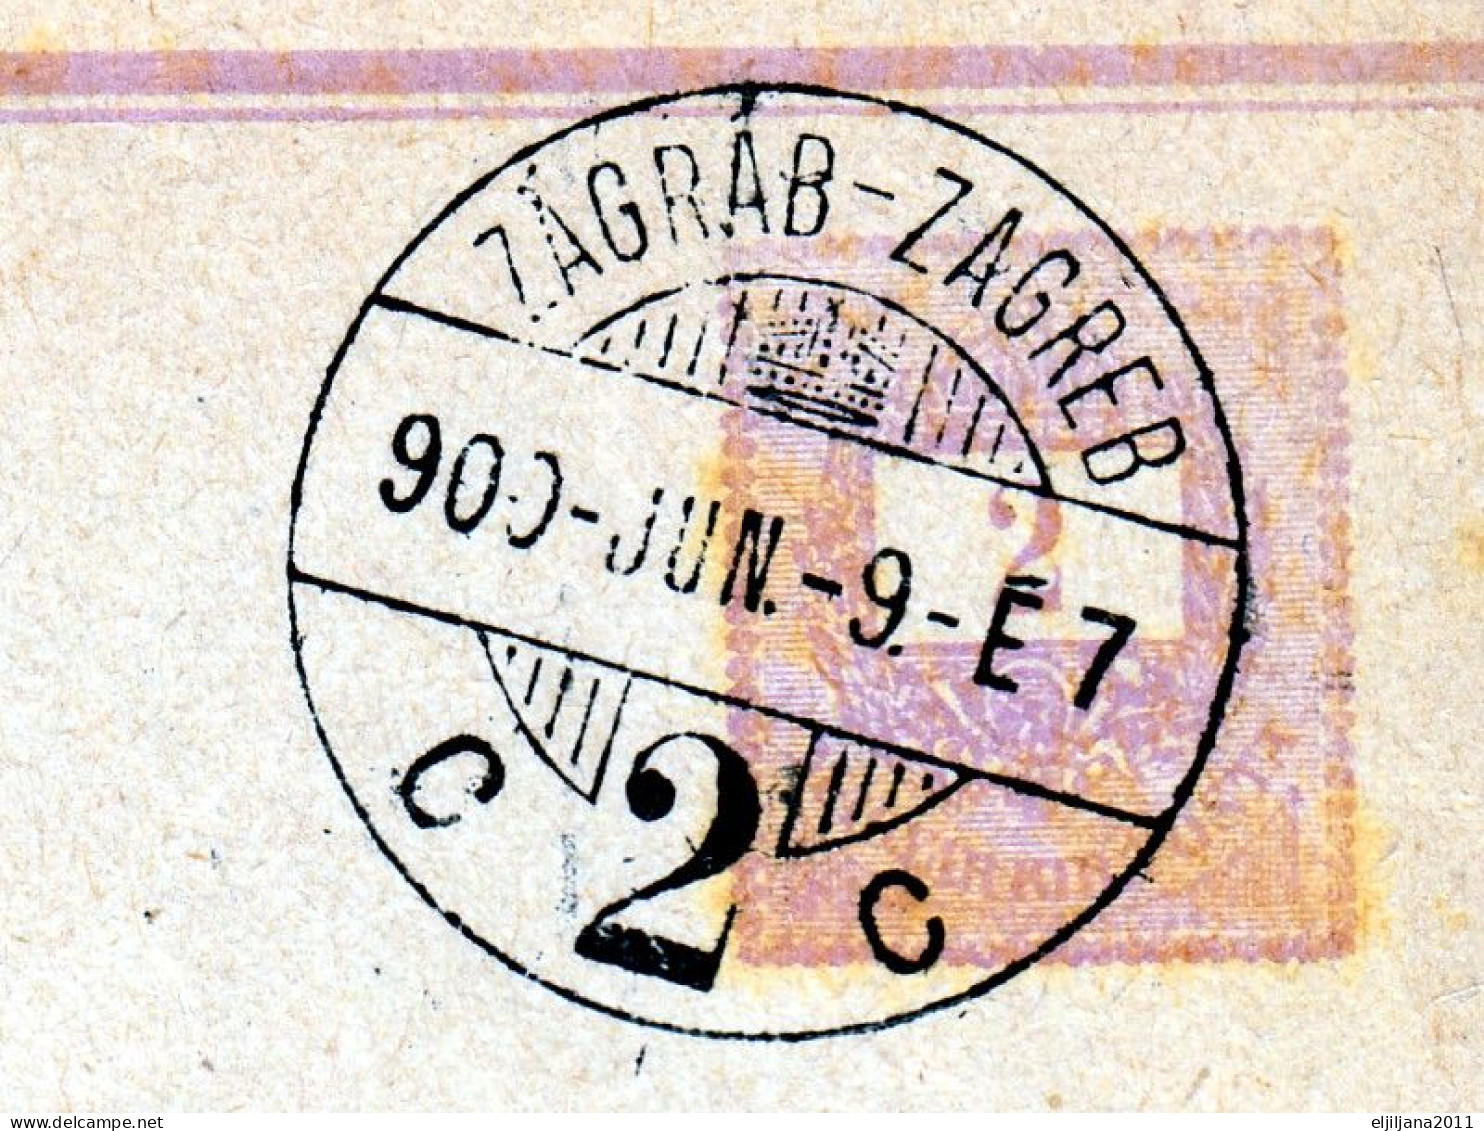 ⁕ Hungary 1900 Croatia ⁕ Nice Postmark ZAGREB, Postage For Newspapers ⁕ Hungary Postal Stationery - Ganzsachen